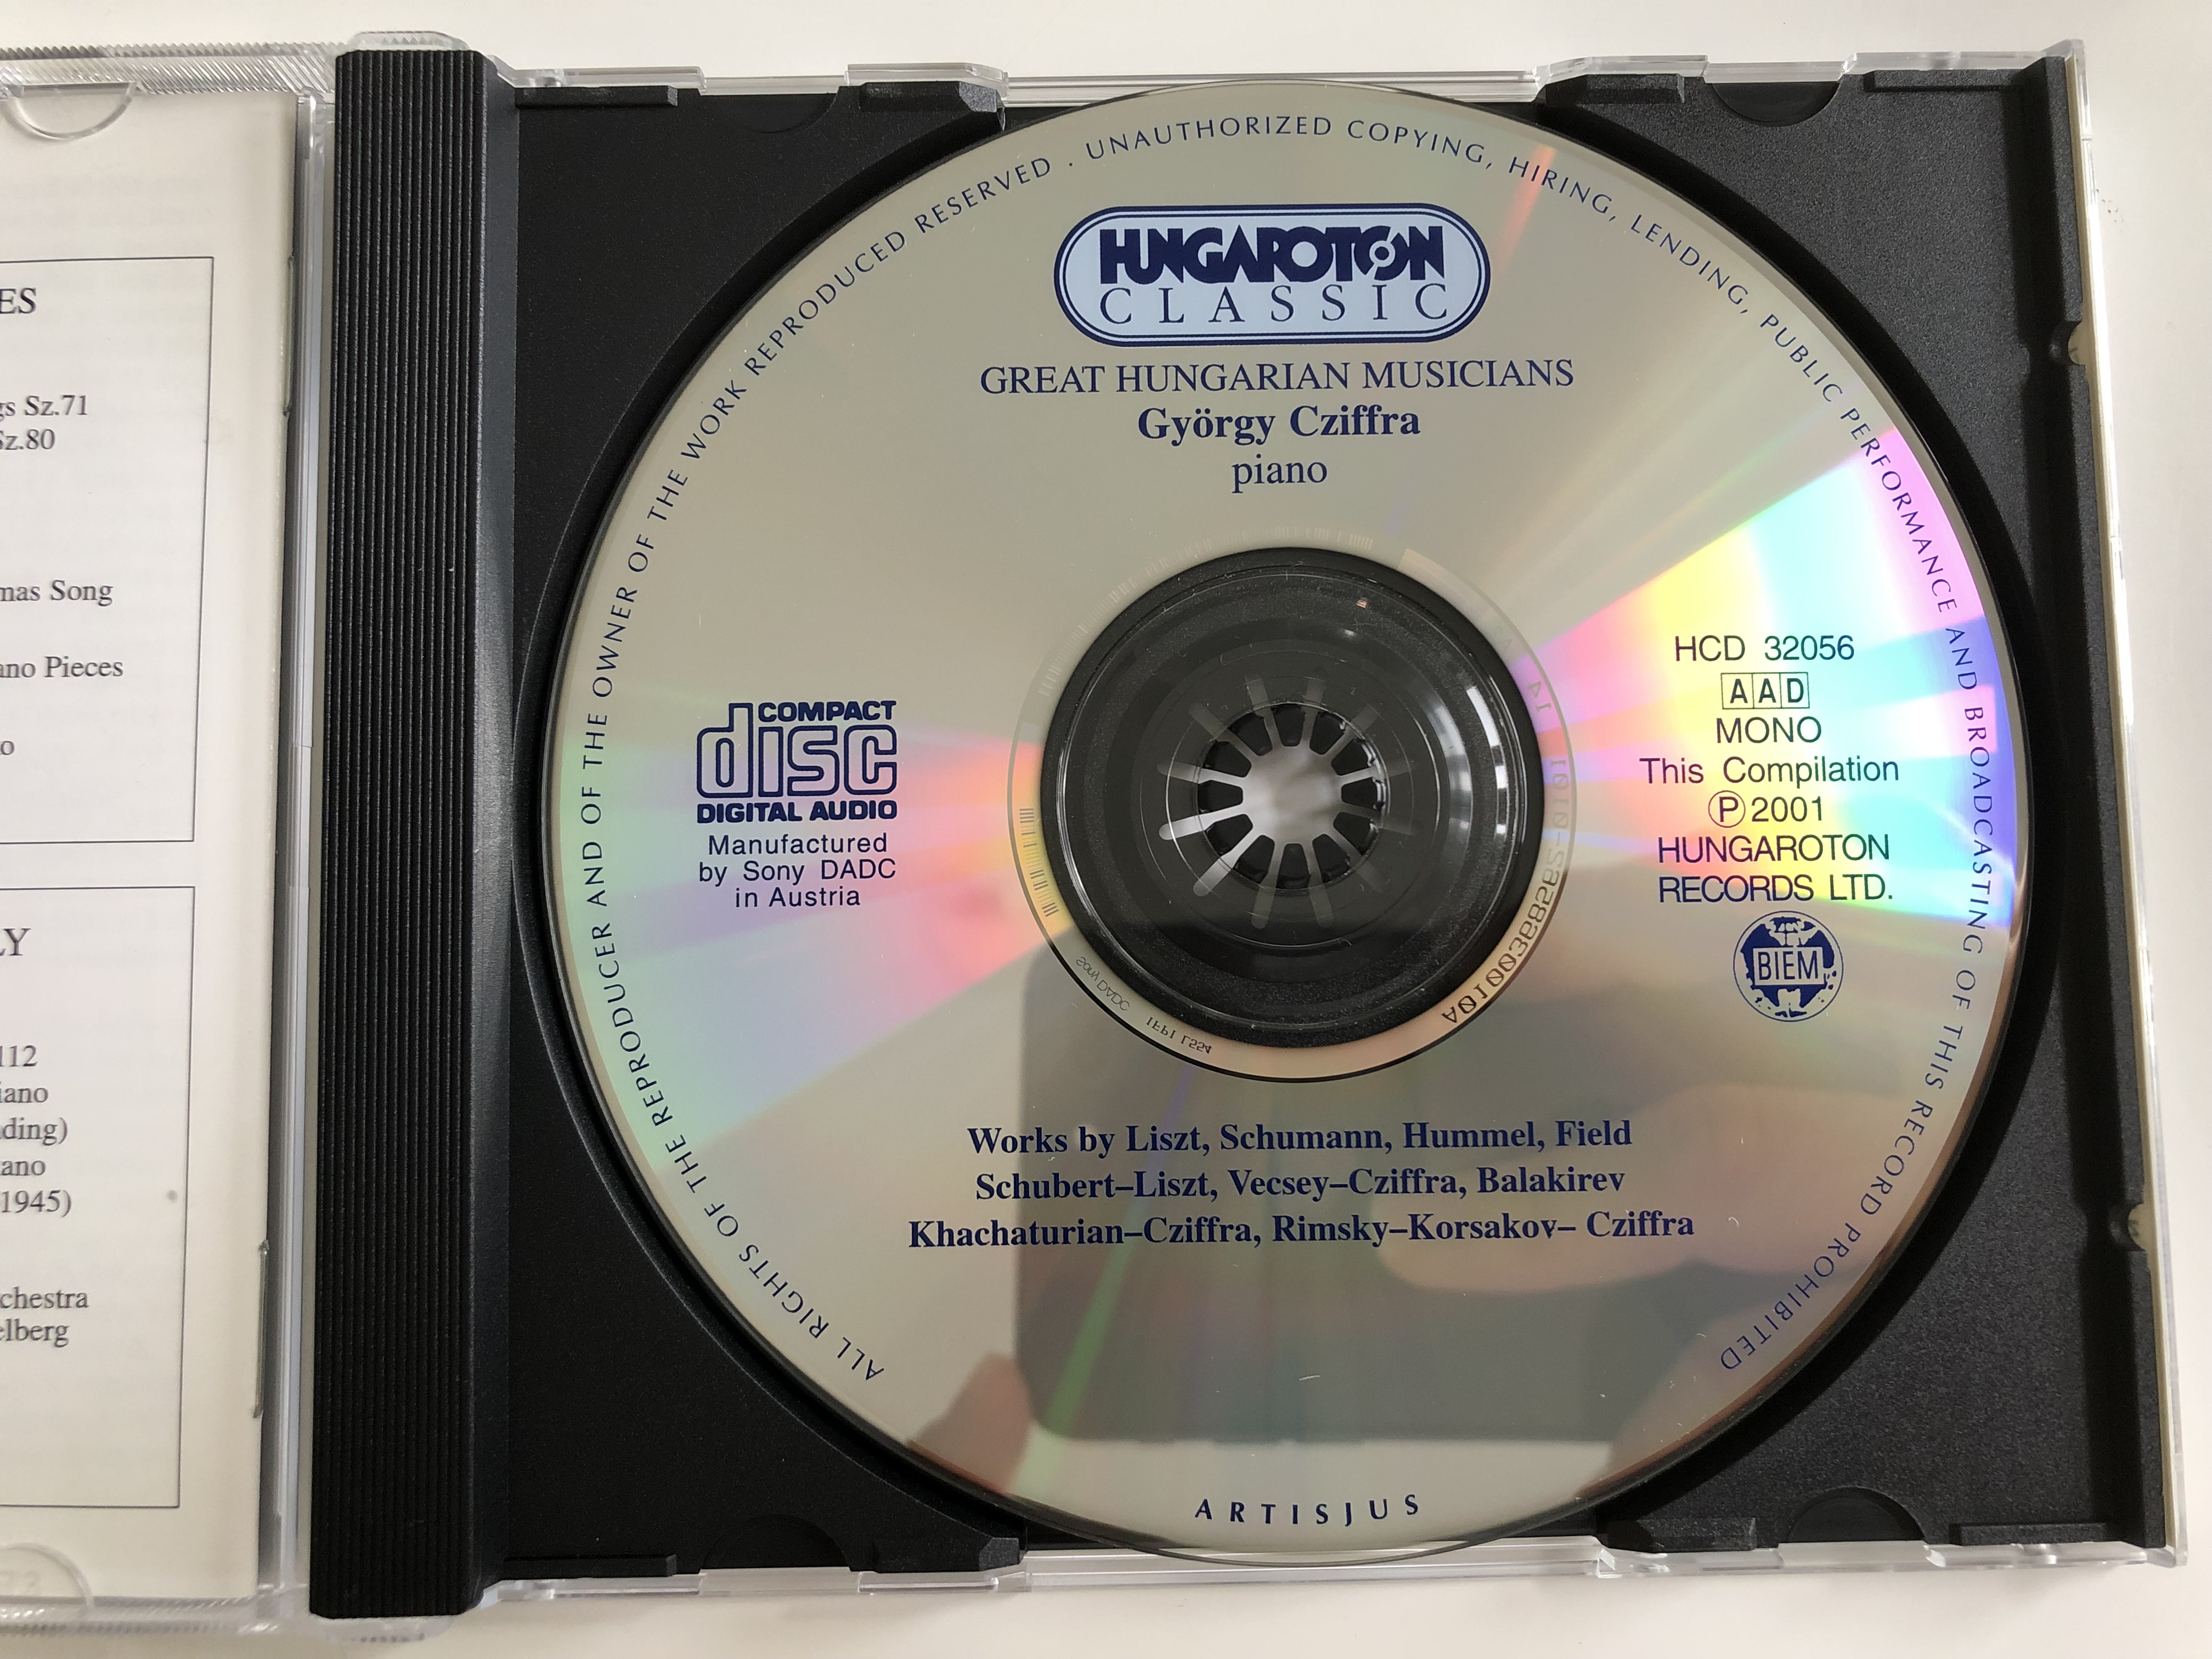 gyorgy-cziffra-piano-liszt-schumann-hummel-field-schubert-liszt-vecsey-cziffra-balakirev-great-hungarian-musicians-hungaroton-audio-cd-2001-mono-hcd-32056-6-.jpg